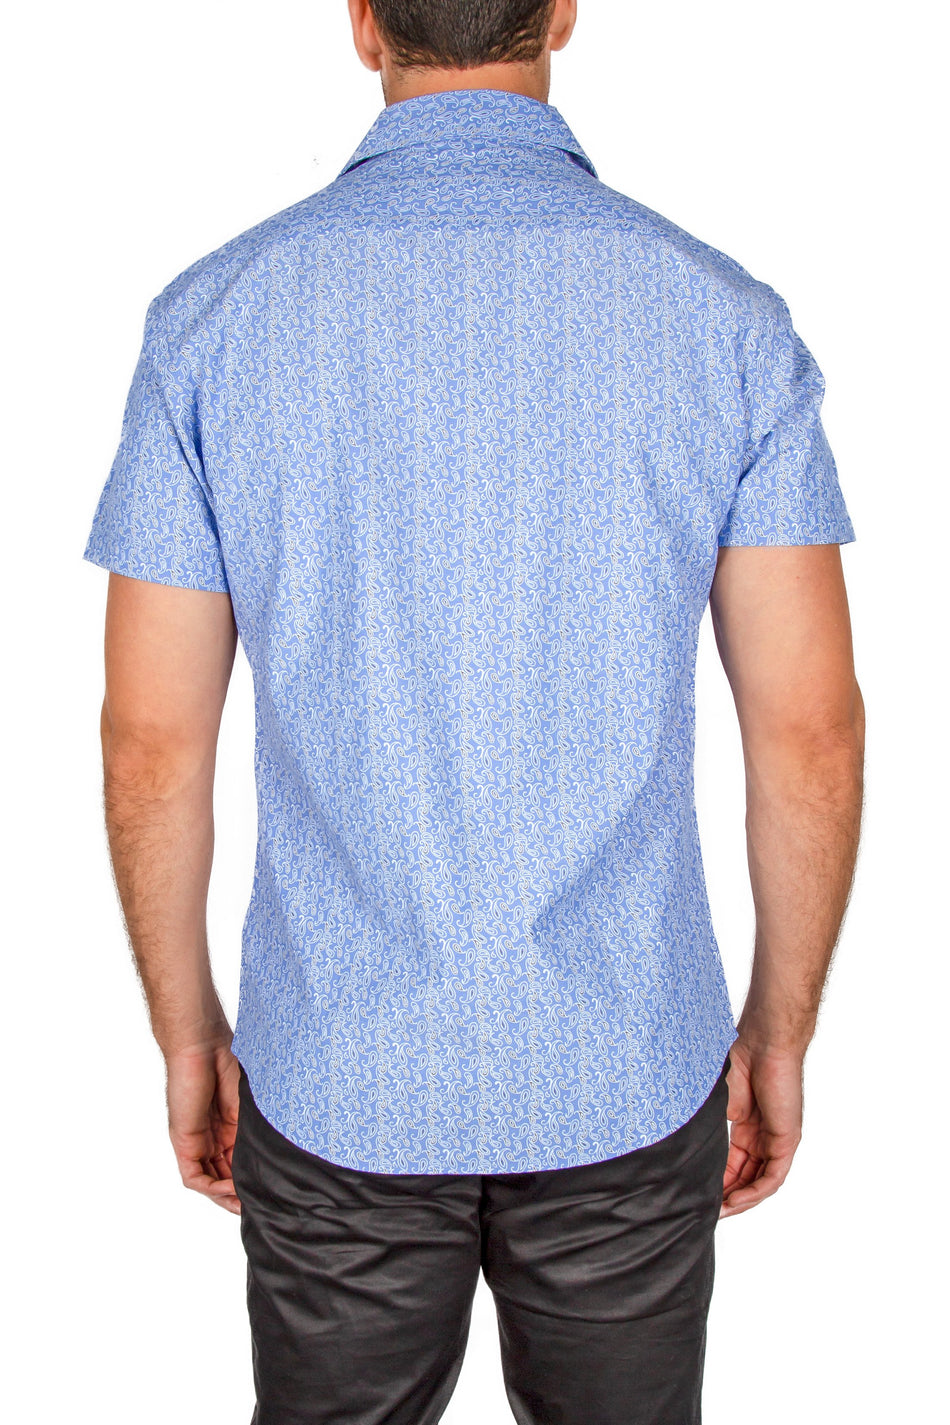 Blue Square Fine Counts Cotton Custom Monogrammed Dress Shirt (#172blu)